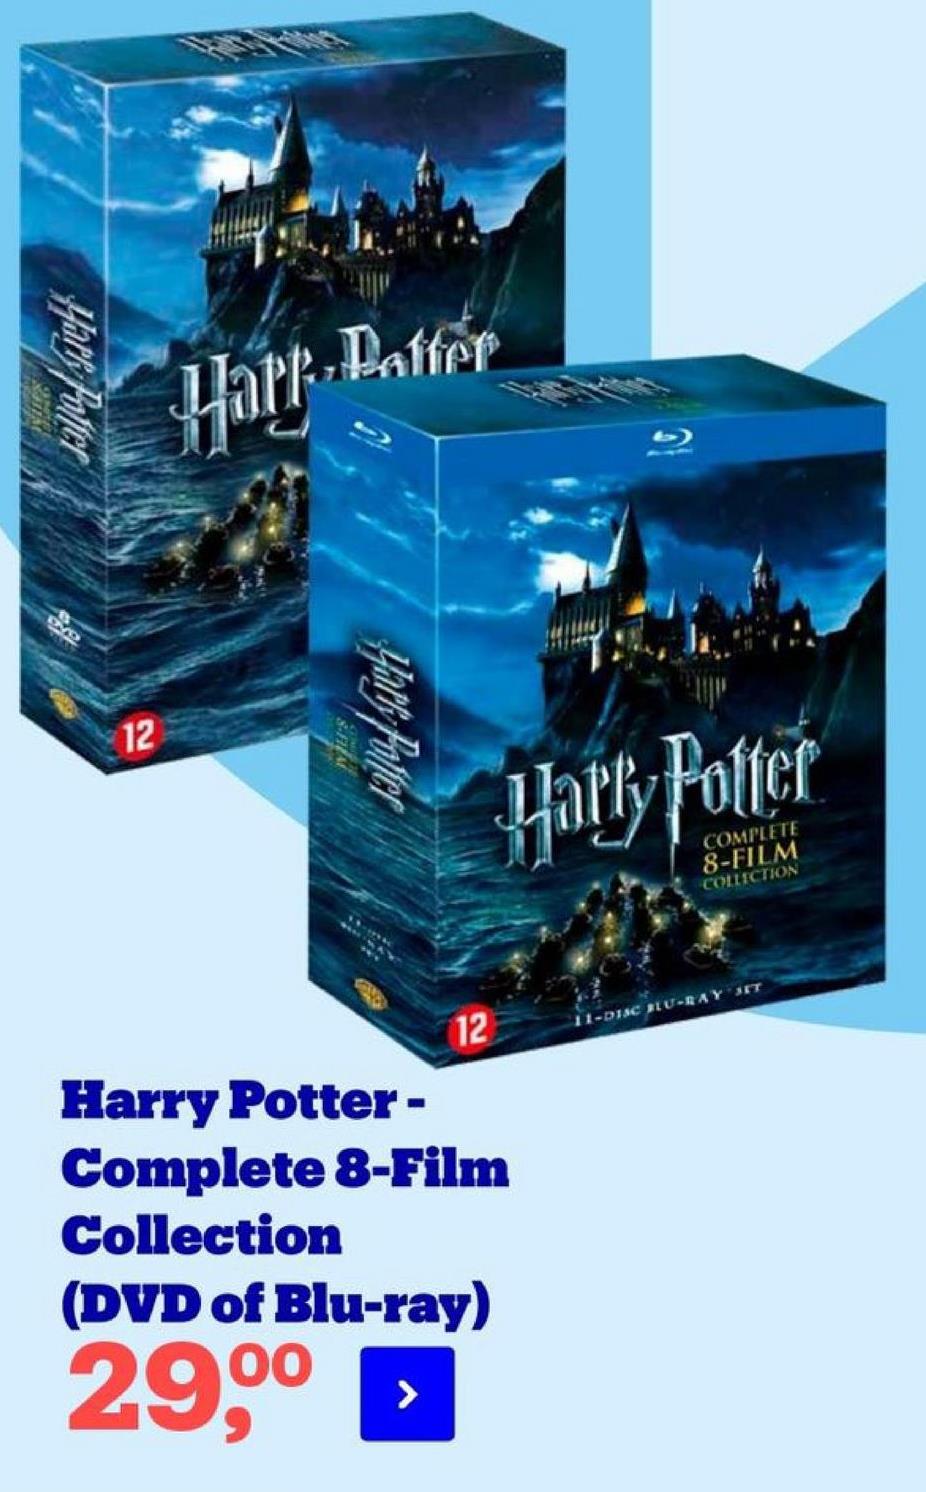 Hath Paltor
Hart Pattern
12
Hats Paper
Harry Potter
COMPLETE
8-FILM
COLLTCTION
12
11-DISC BLU-RAY UIT
Harry Potter -
Complete 8-Film
Collection
(DVD of Blu-ray)
290
>
